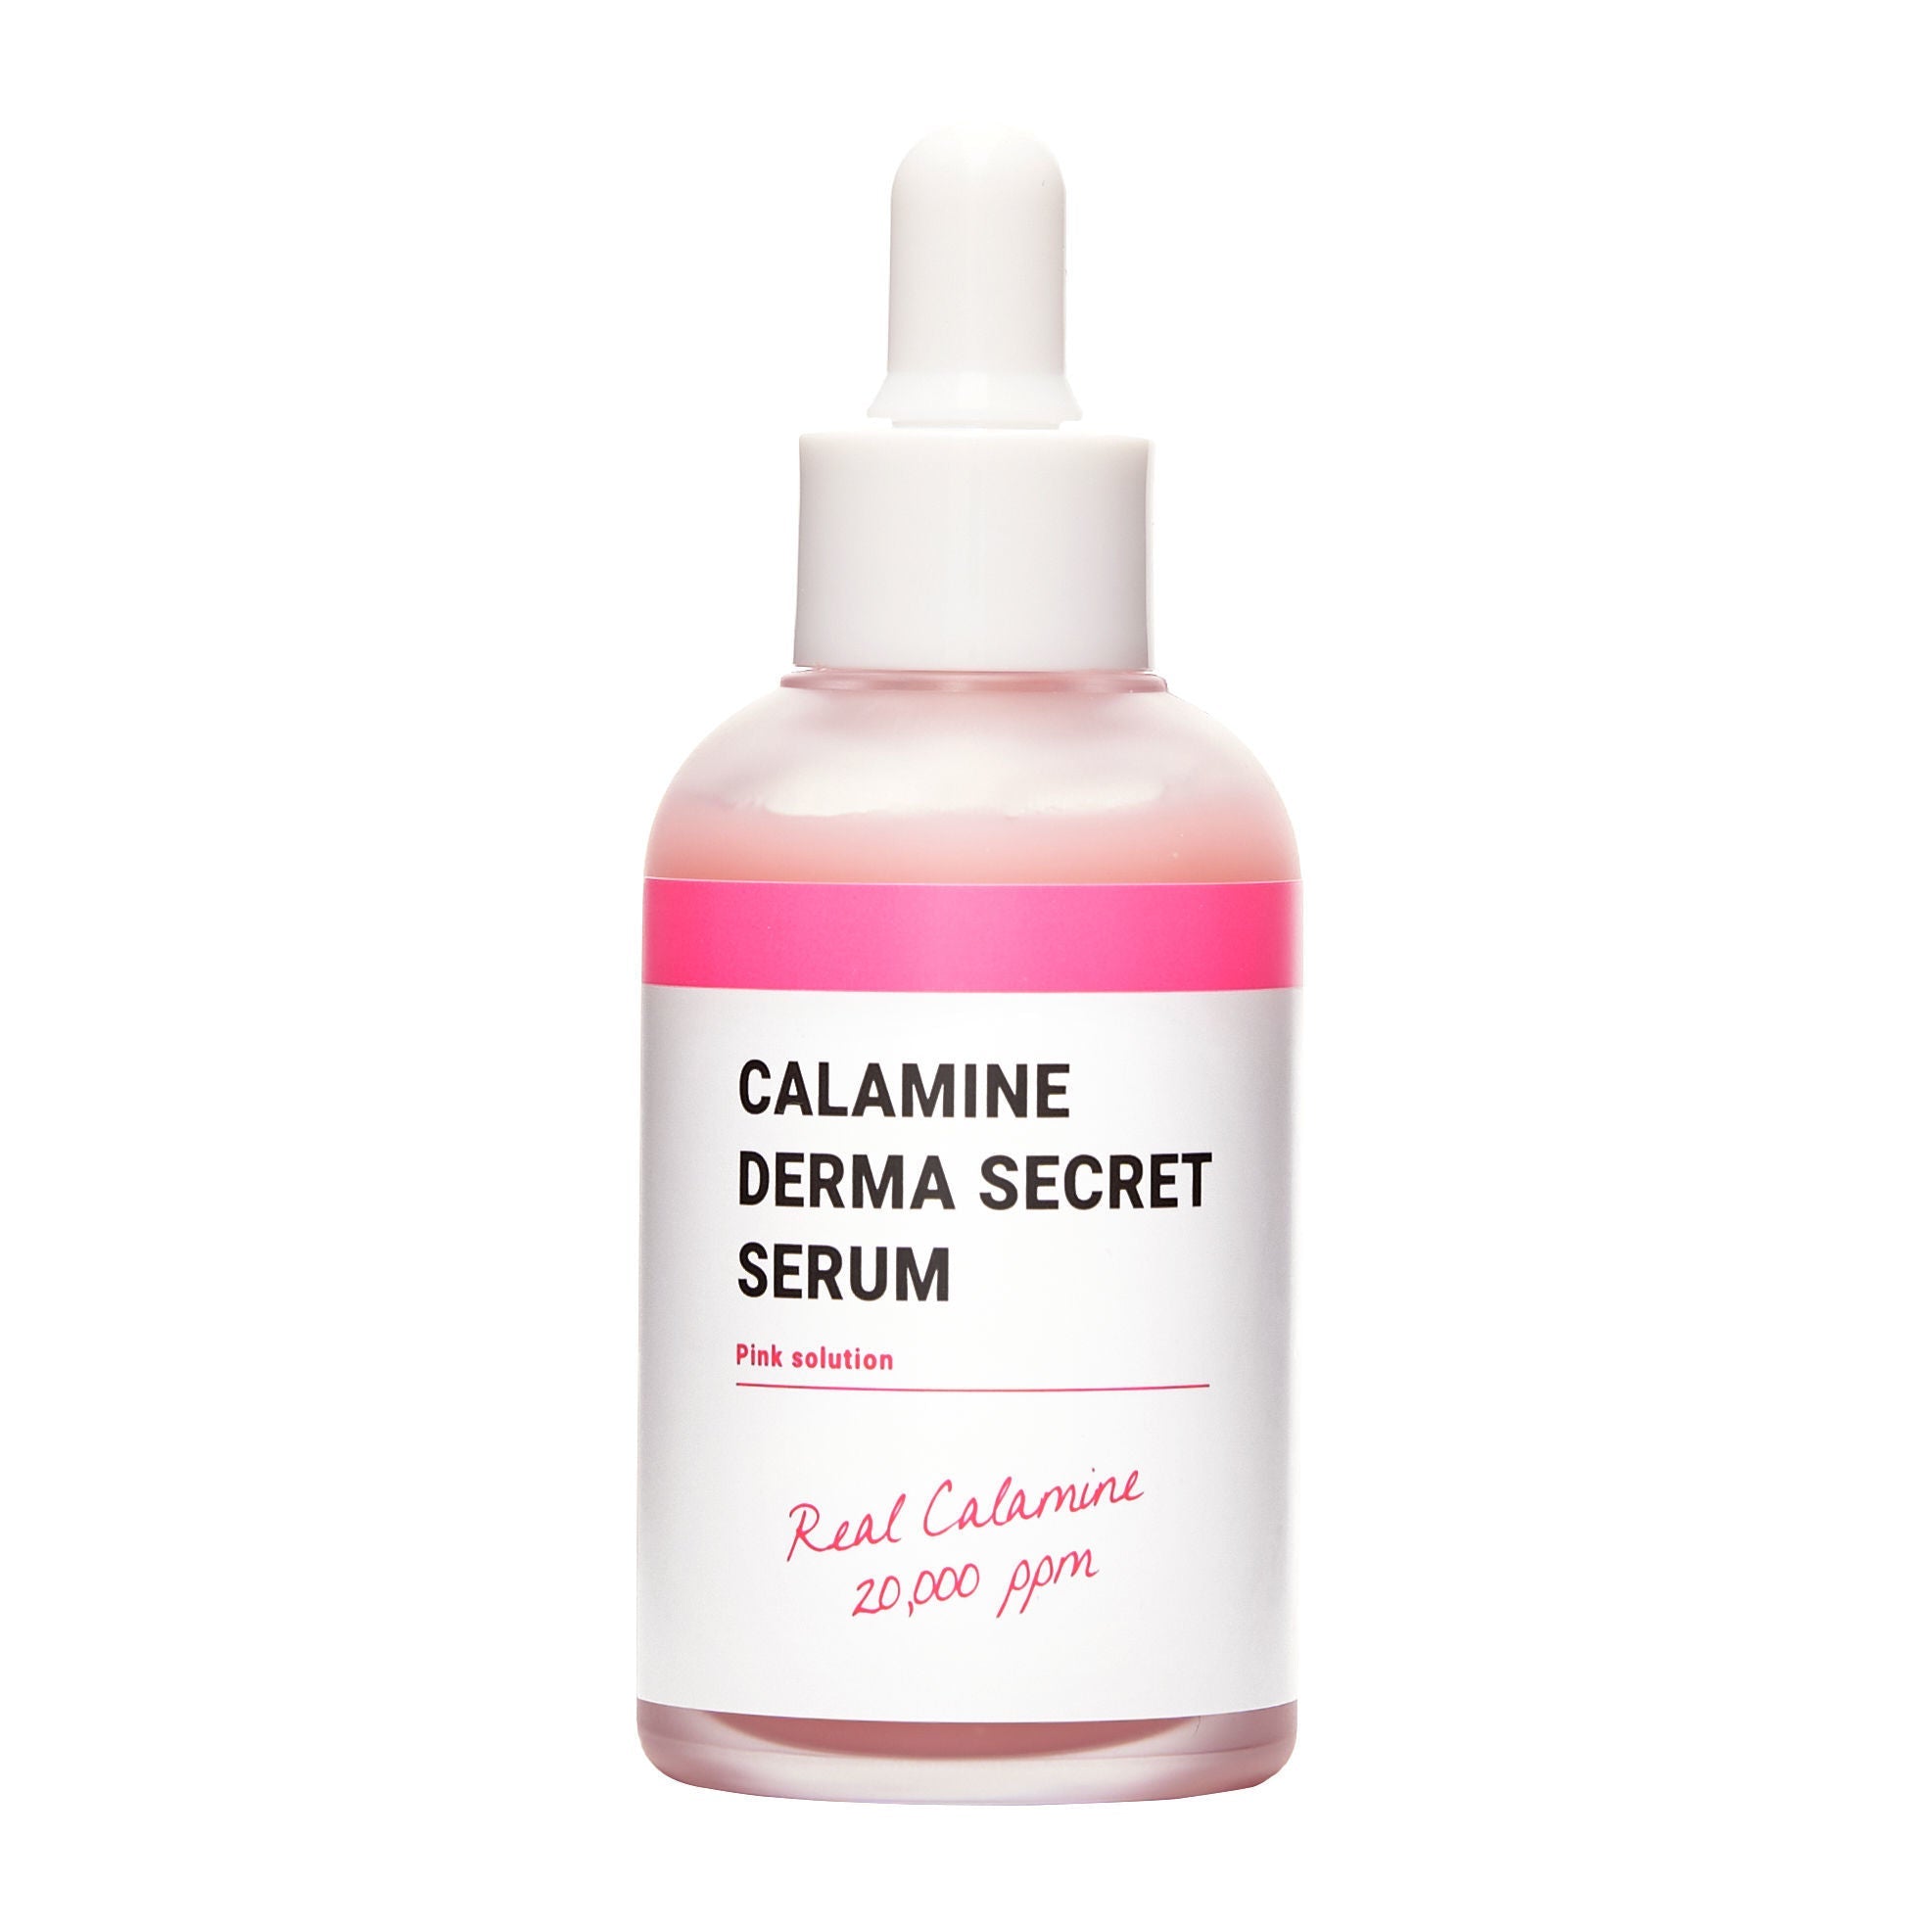 Calamine Acne Care Duo by K - Secret